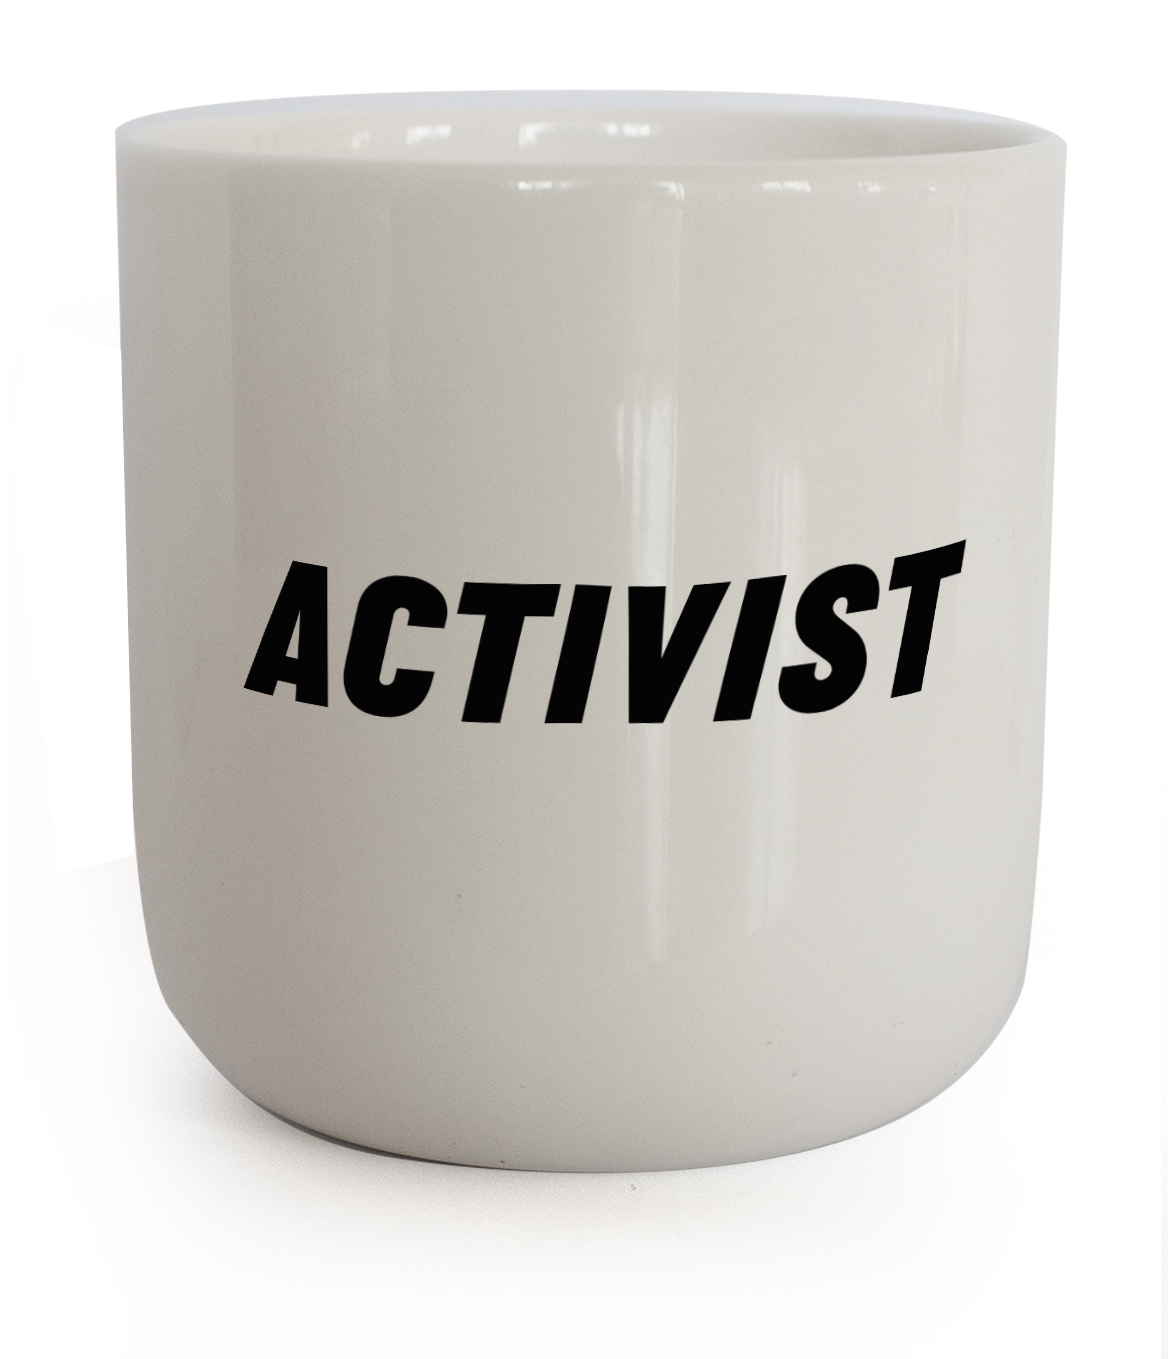 PLTY Activist Mug